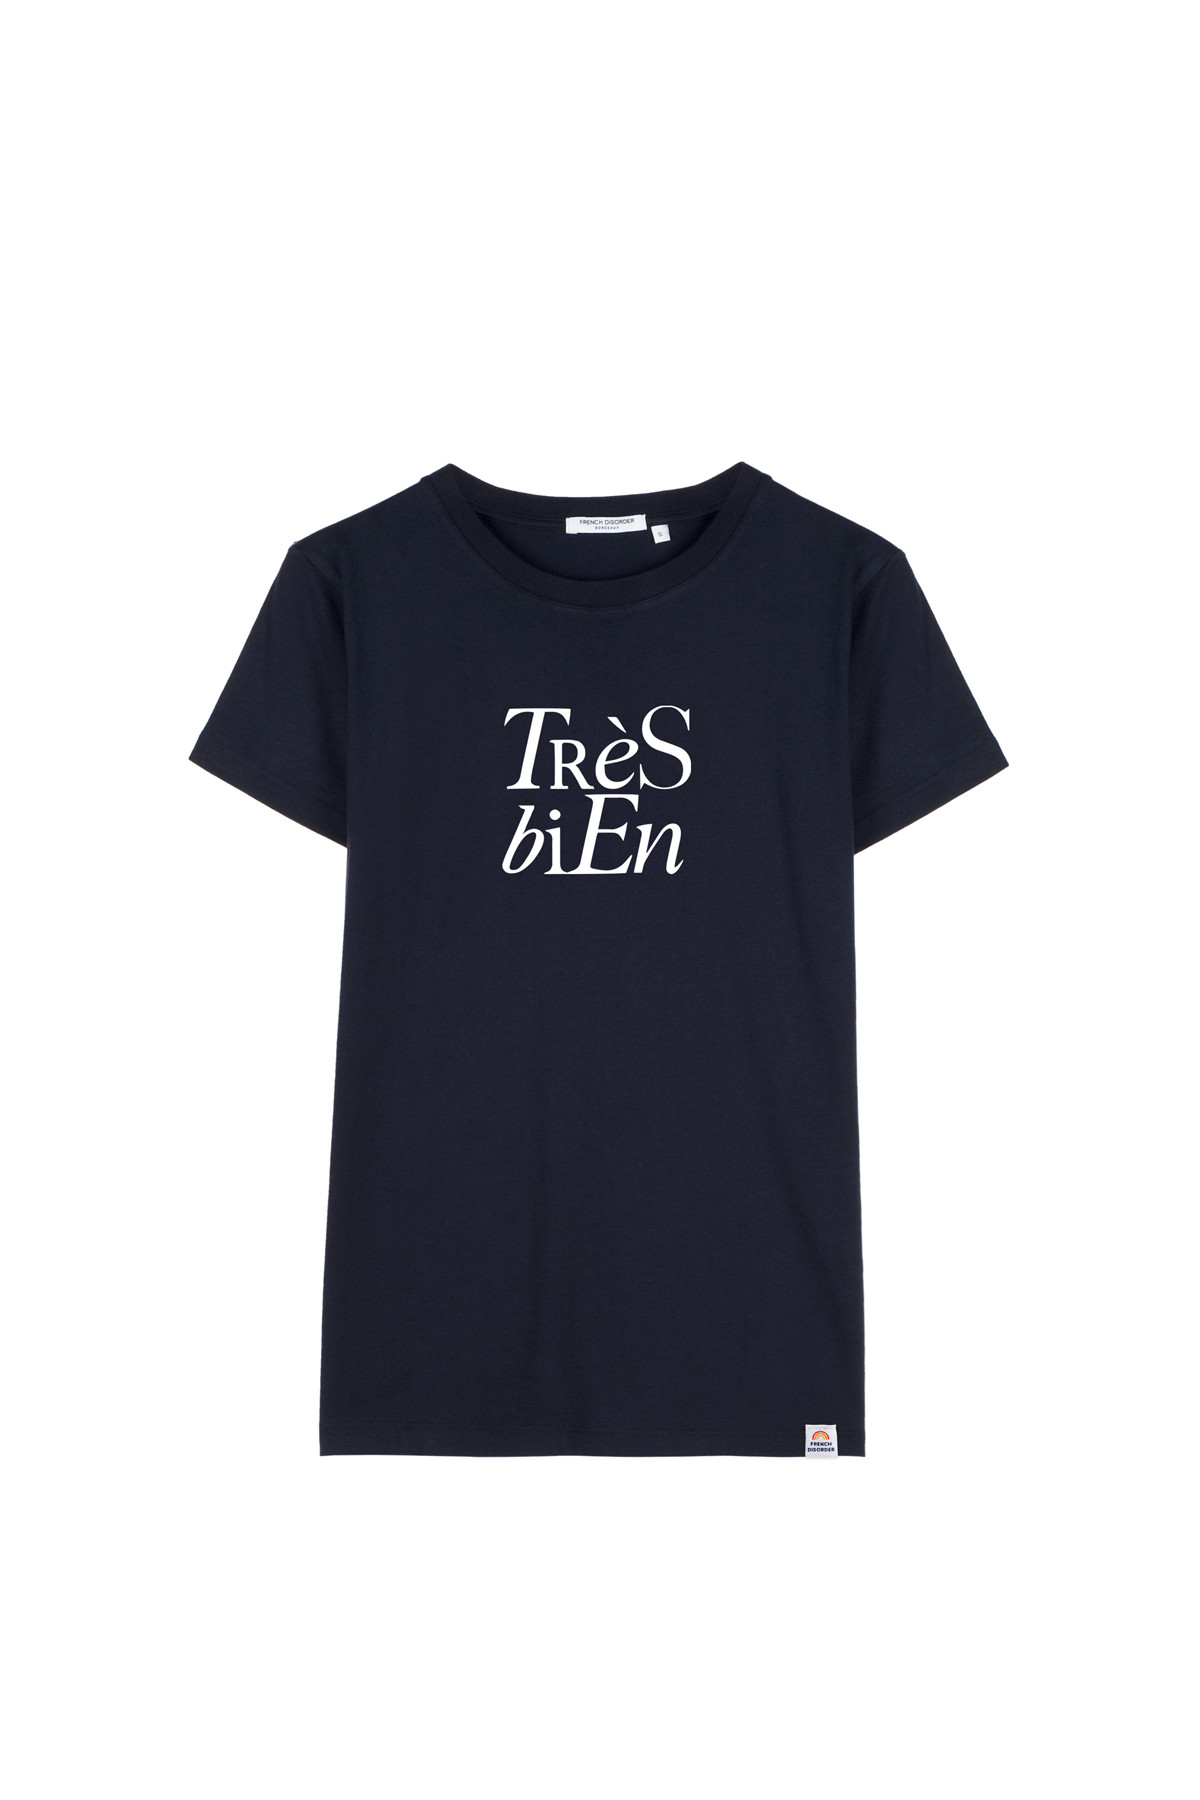 Photo de T-SHIRTS COL ROND Tshirt TRES BIEN chez French Disorder